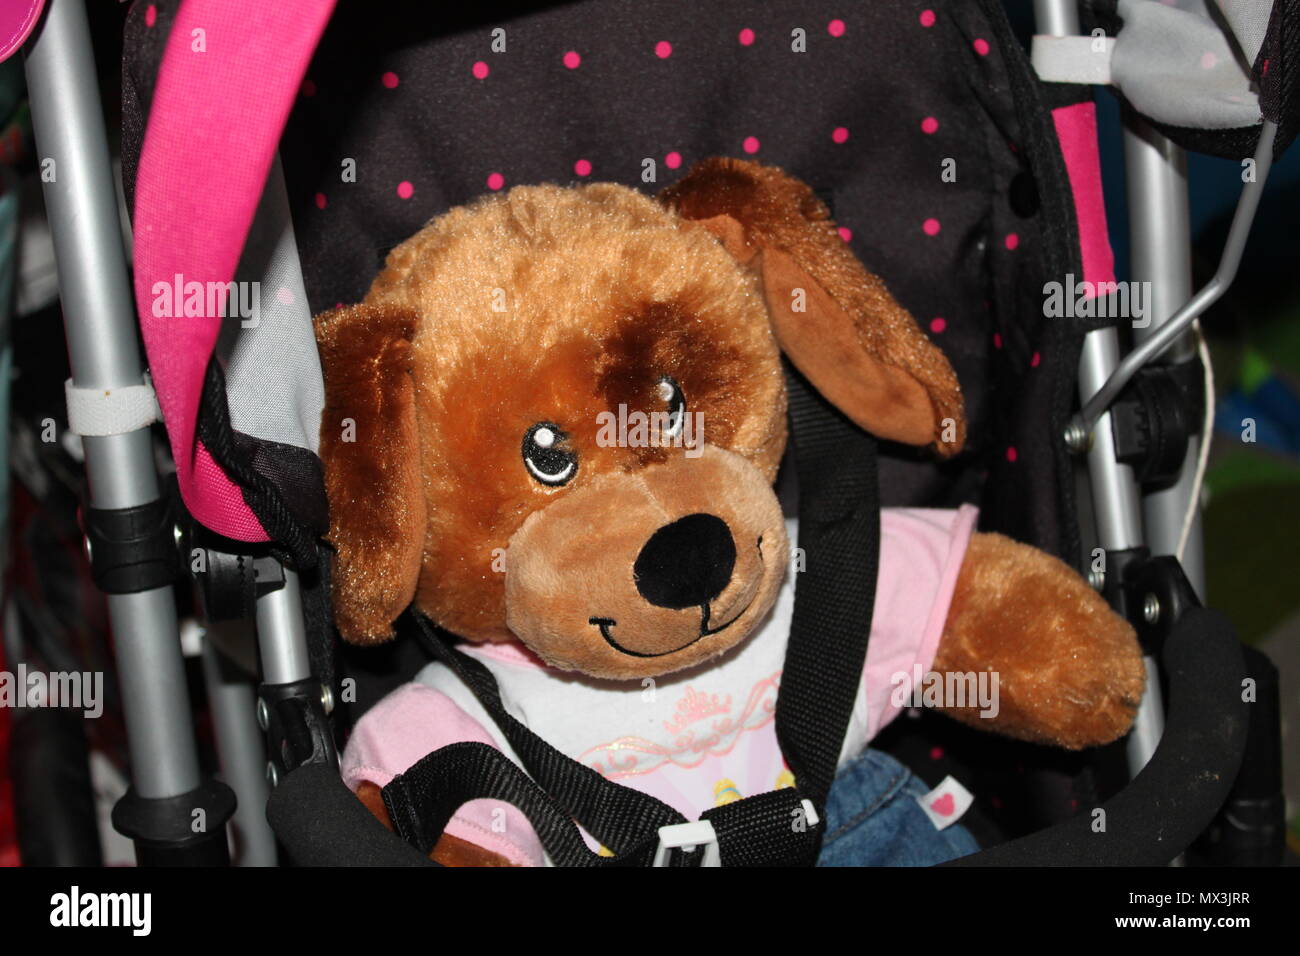 Teddy Bear in a push chair Stock Photo